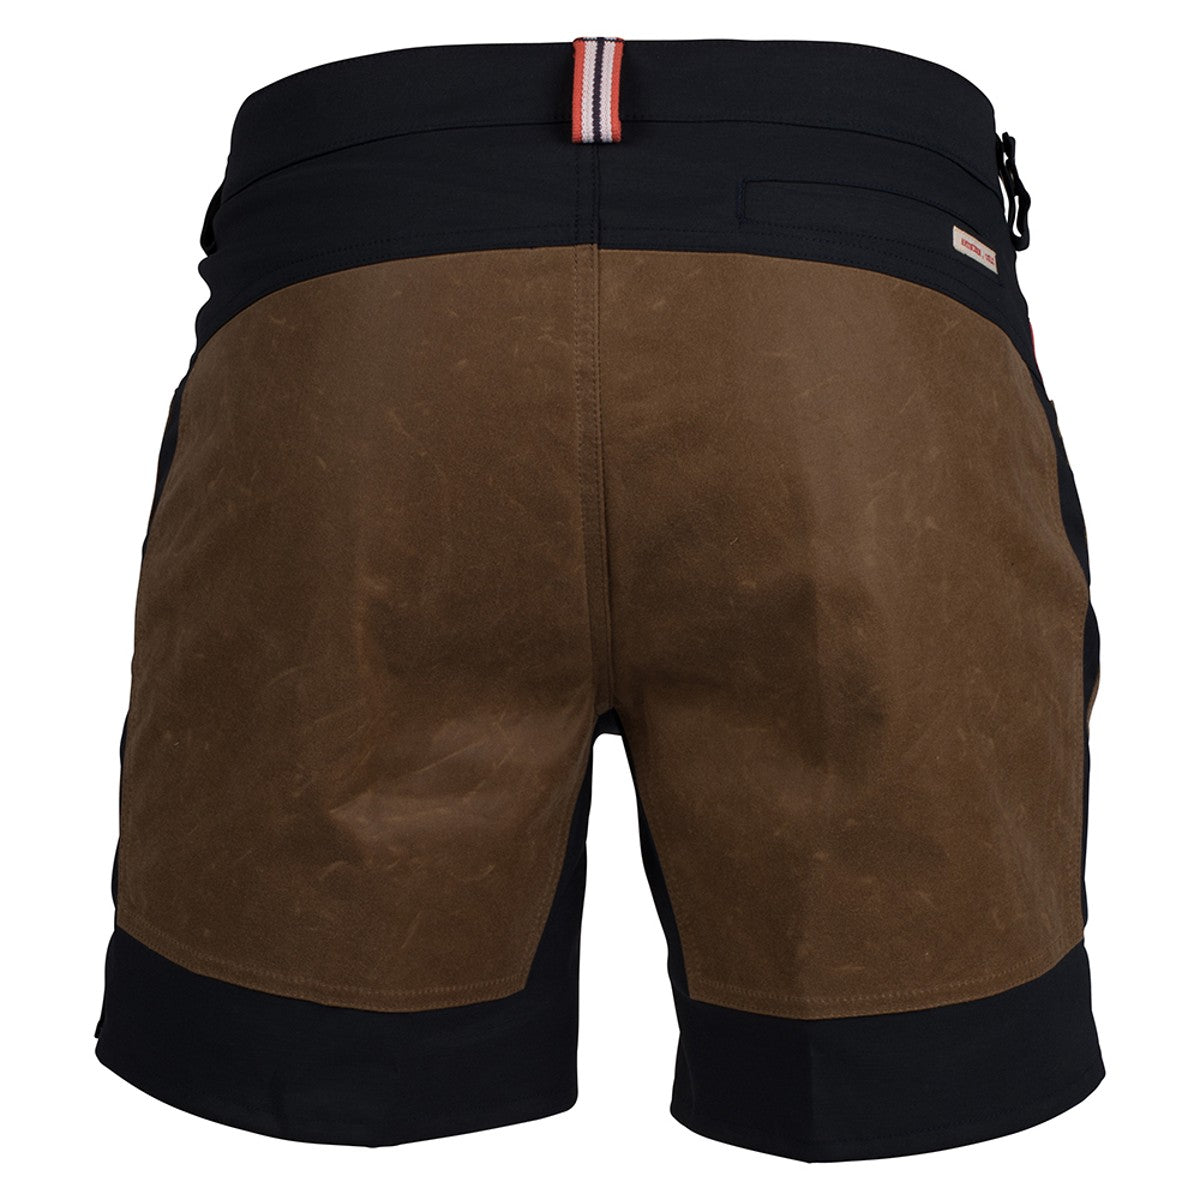 Amundsen Sports - Men's 7 Incher Field Shorts - Faded Navy / Tan